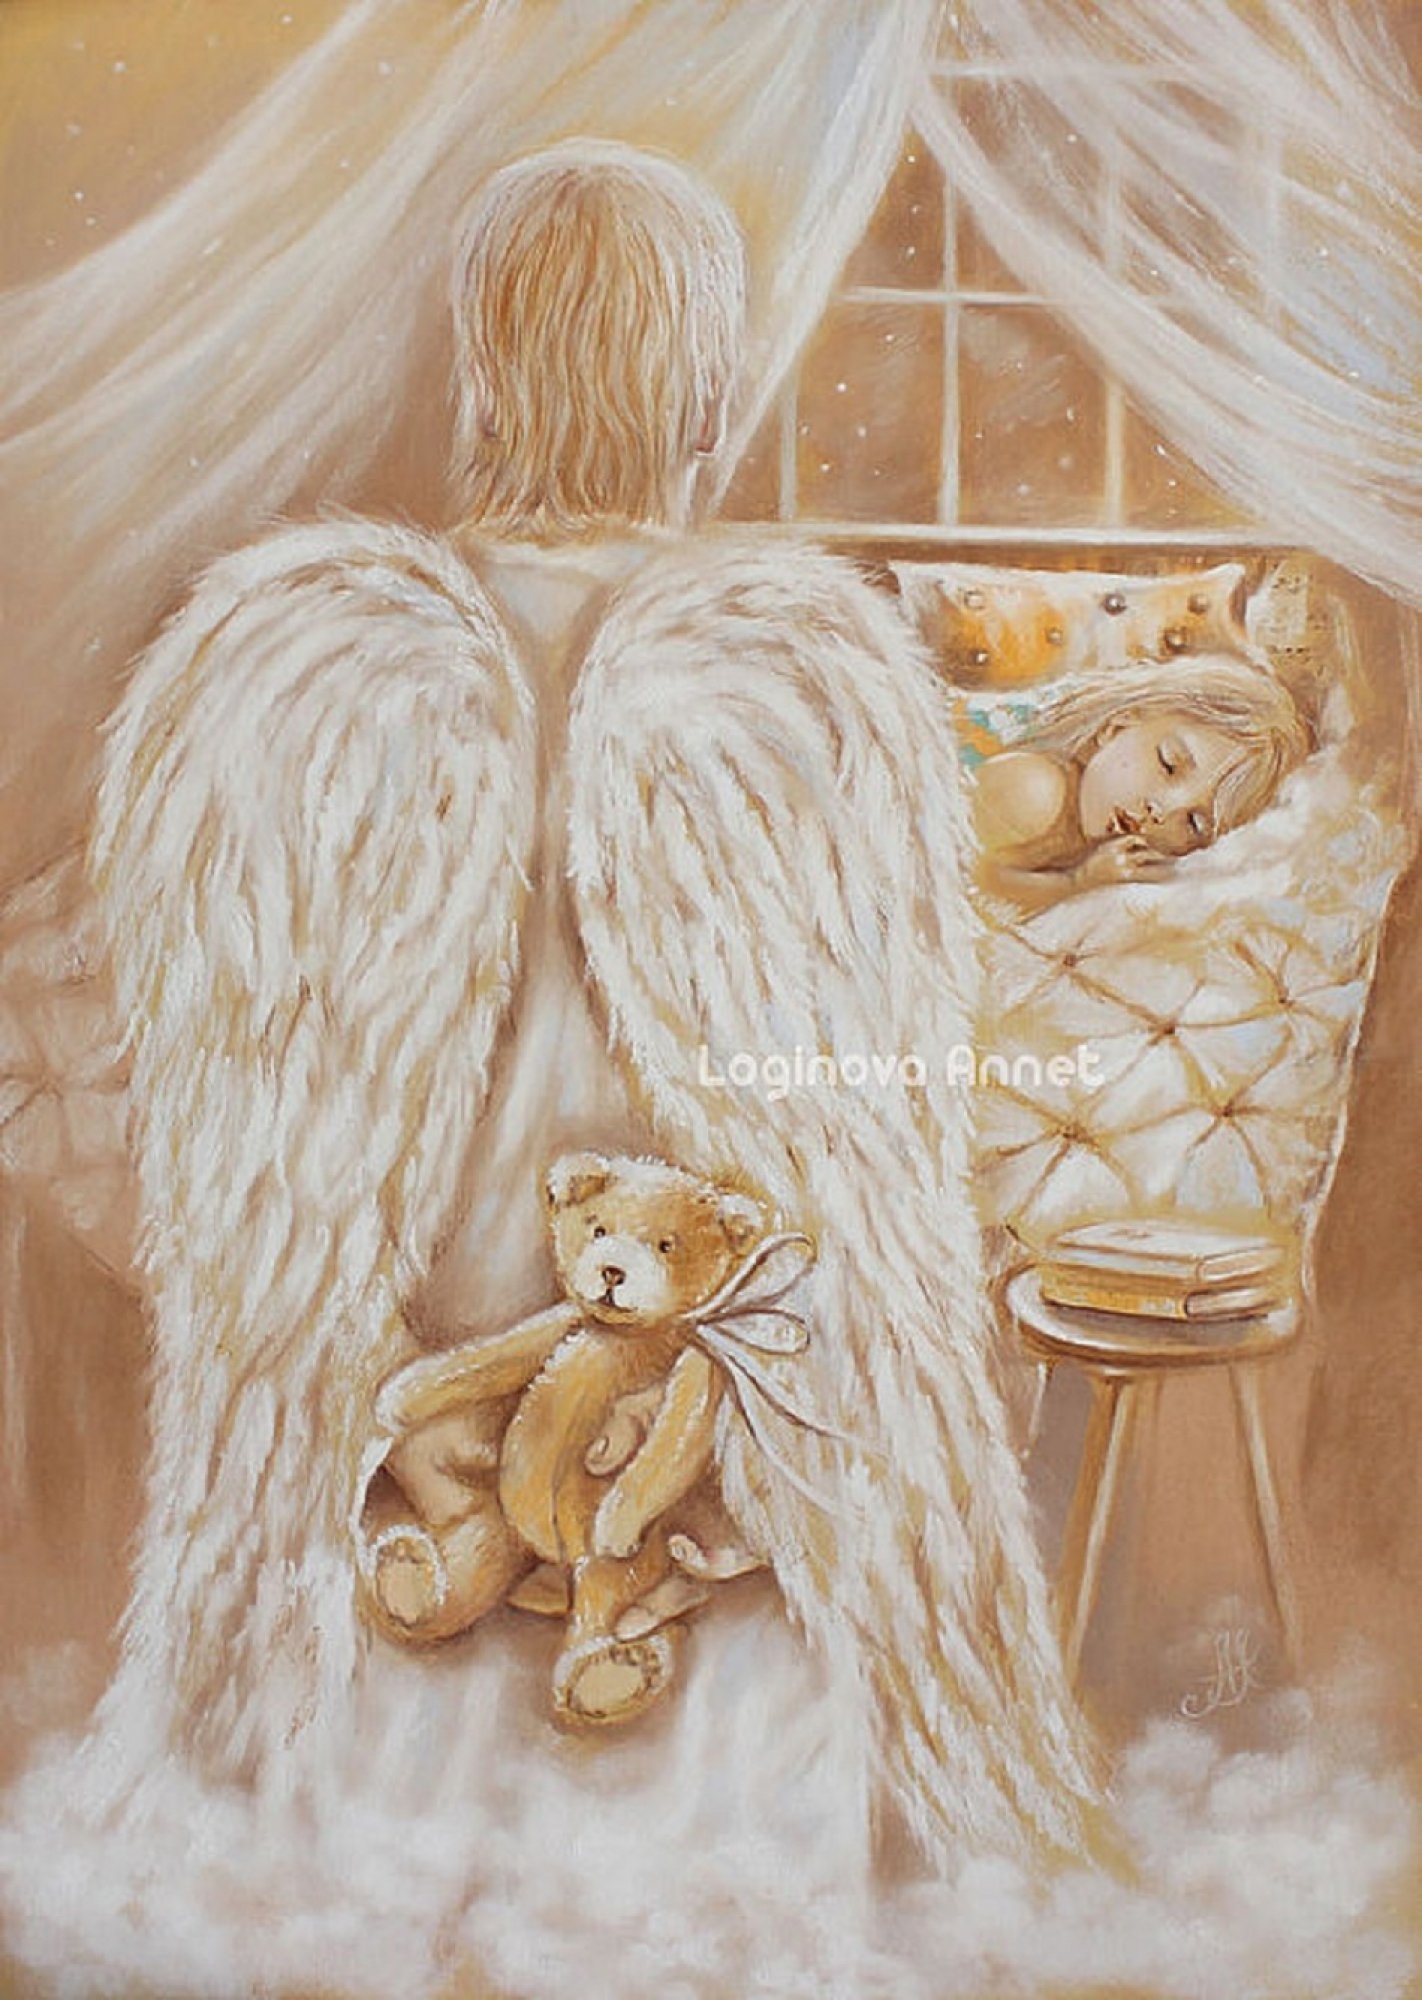 Мама добрый ангел. Аннет Логинова ангелы. Аннет Логинова художник. Картины художницы Аннет Логинова. Логинова Аннет художник картины ангелов.